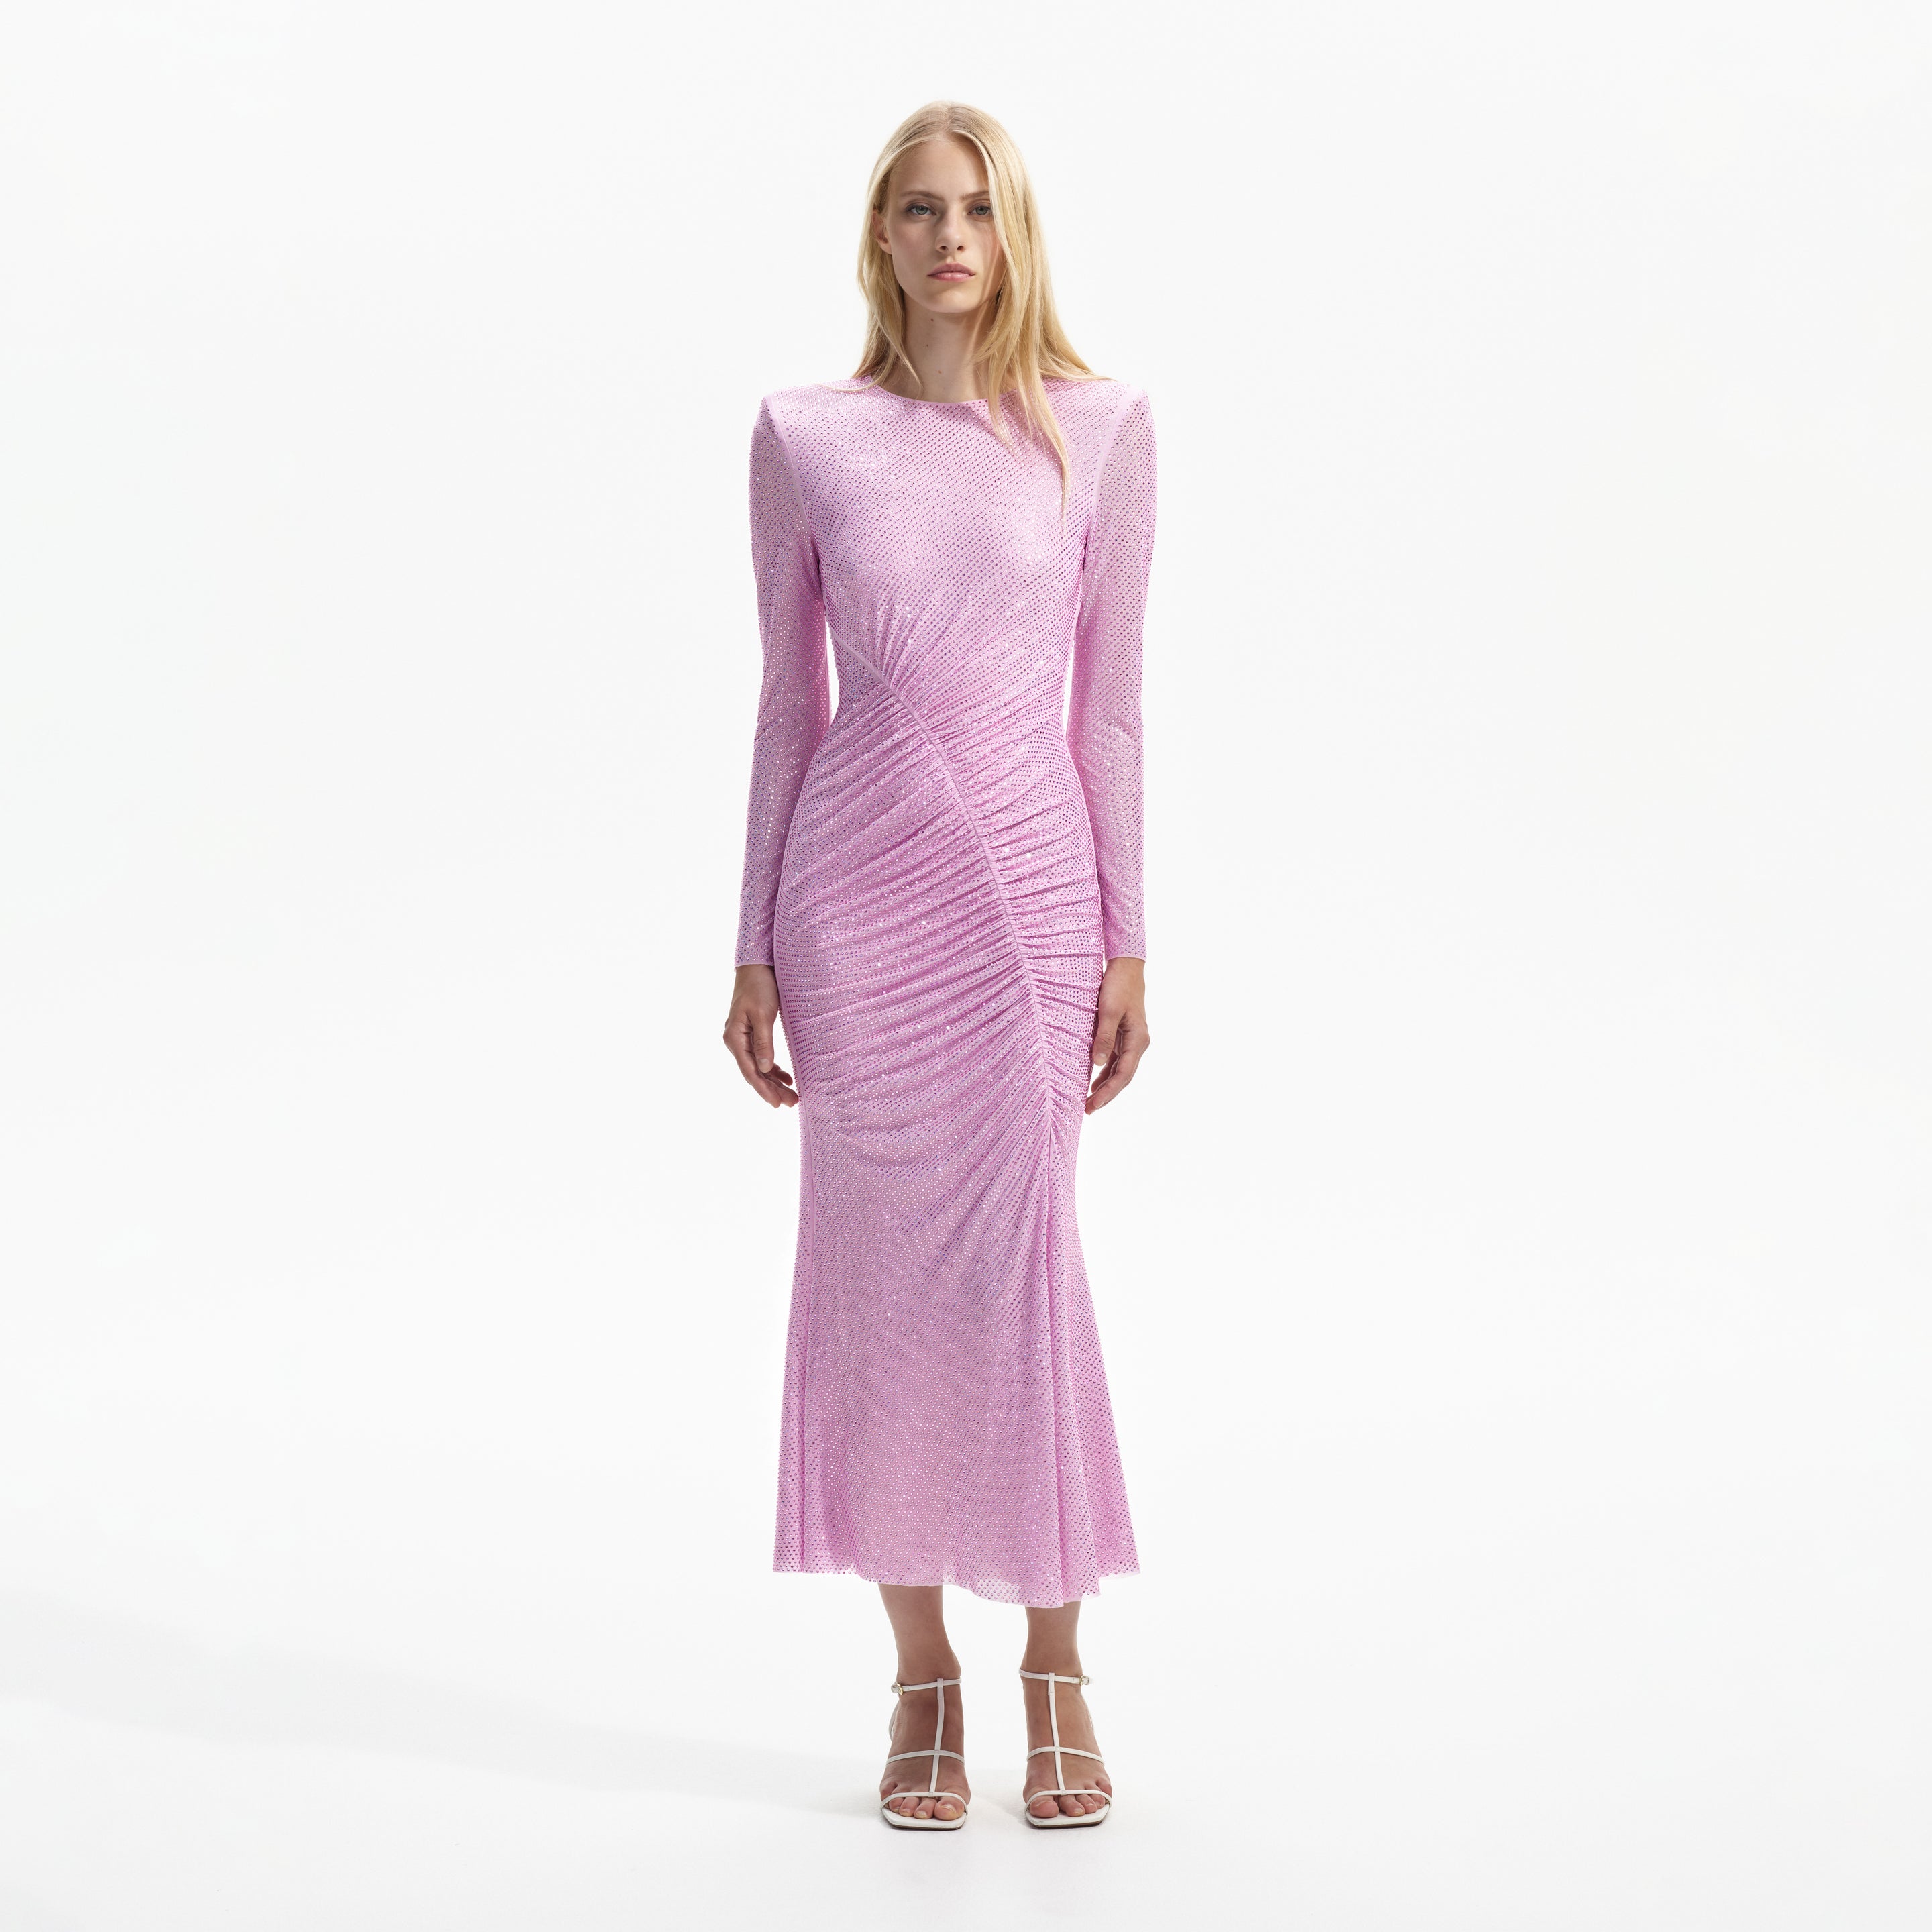 Express Yourself Black Rhinestone Mesh Midi Dress – Pink Lily